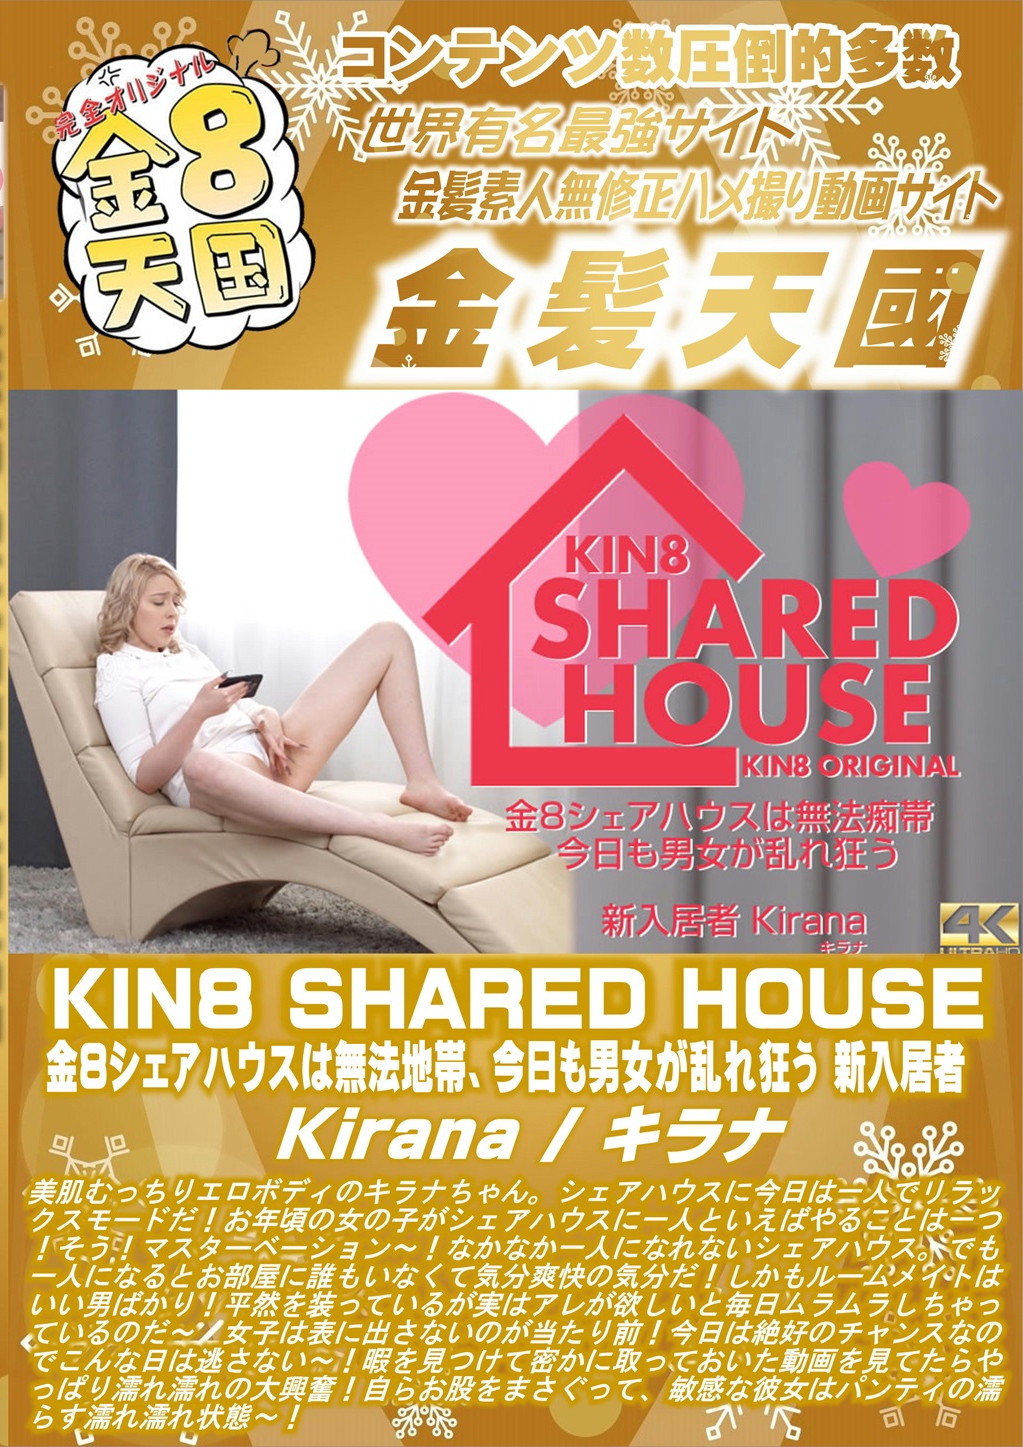 KIN8 SHARED HOUSE 金8シェアハウスは無法地帯、今日も男女が乱れ狂う 新入居者 Kirana キラナ